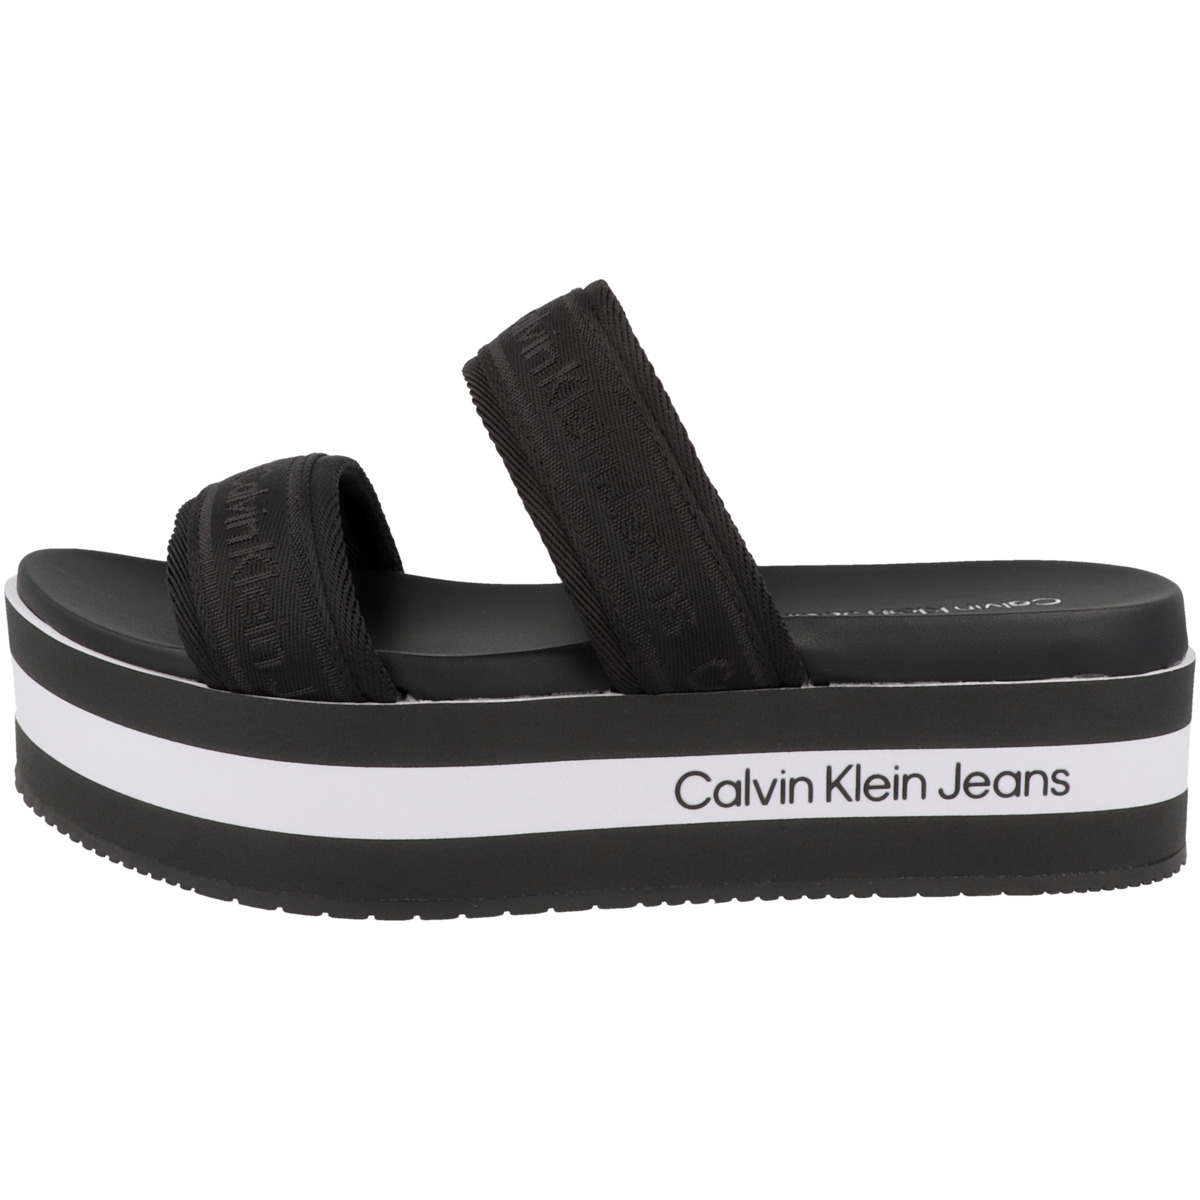 Calvin Klein Jeans Flatform Sandal Twostrap Sandale schwarz